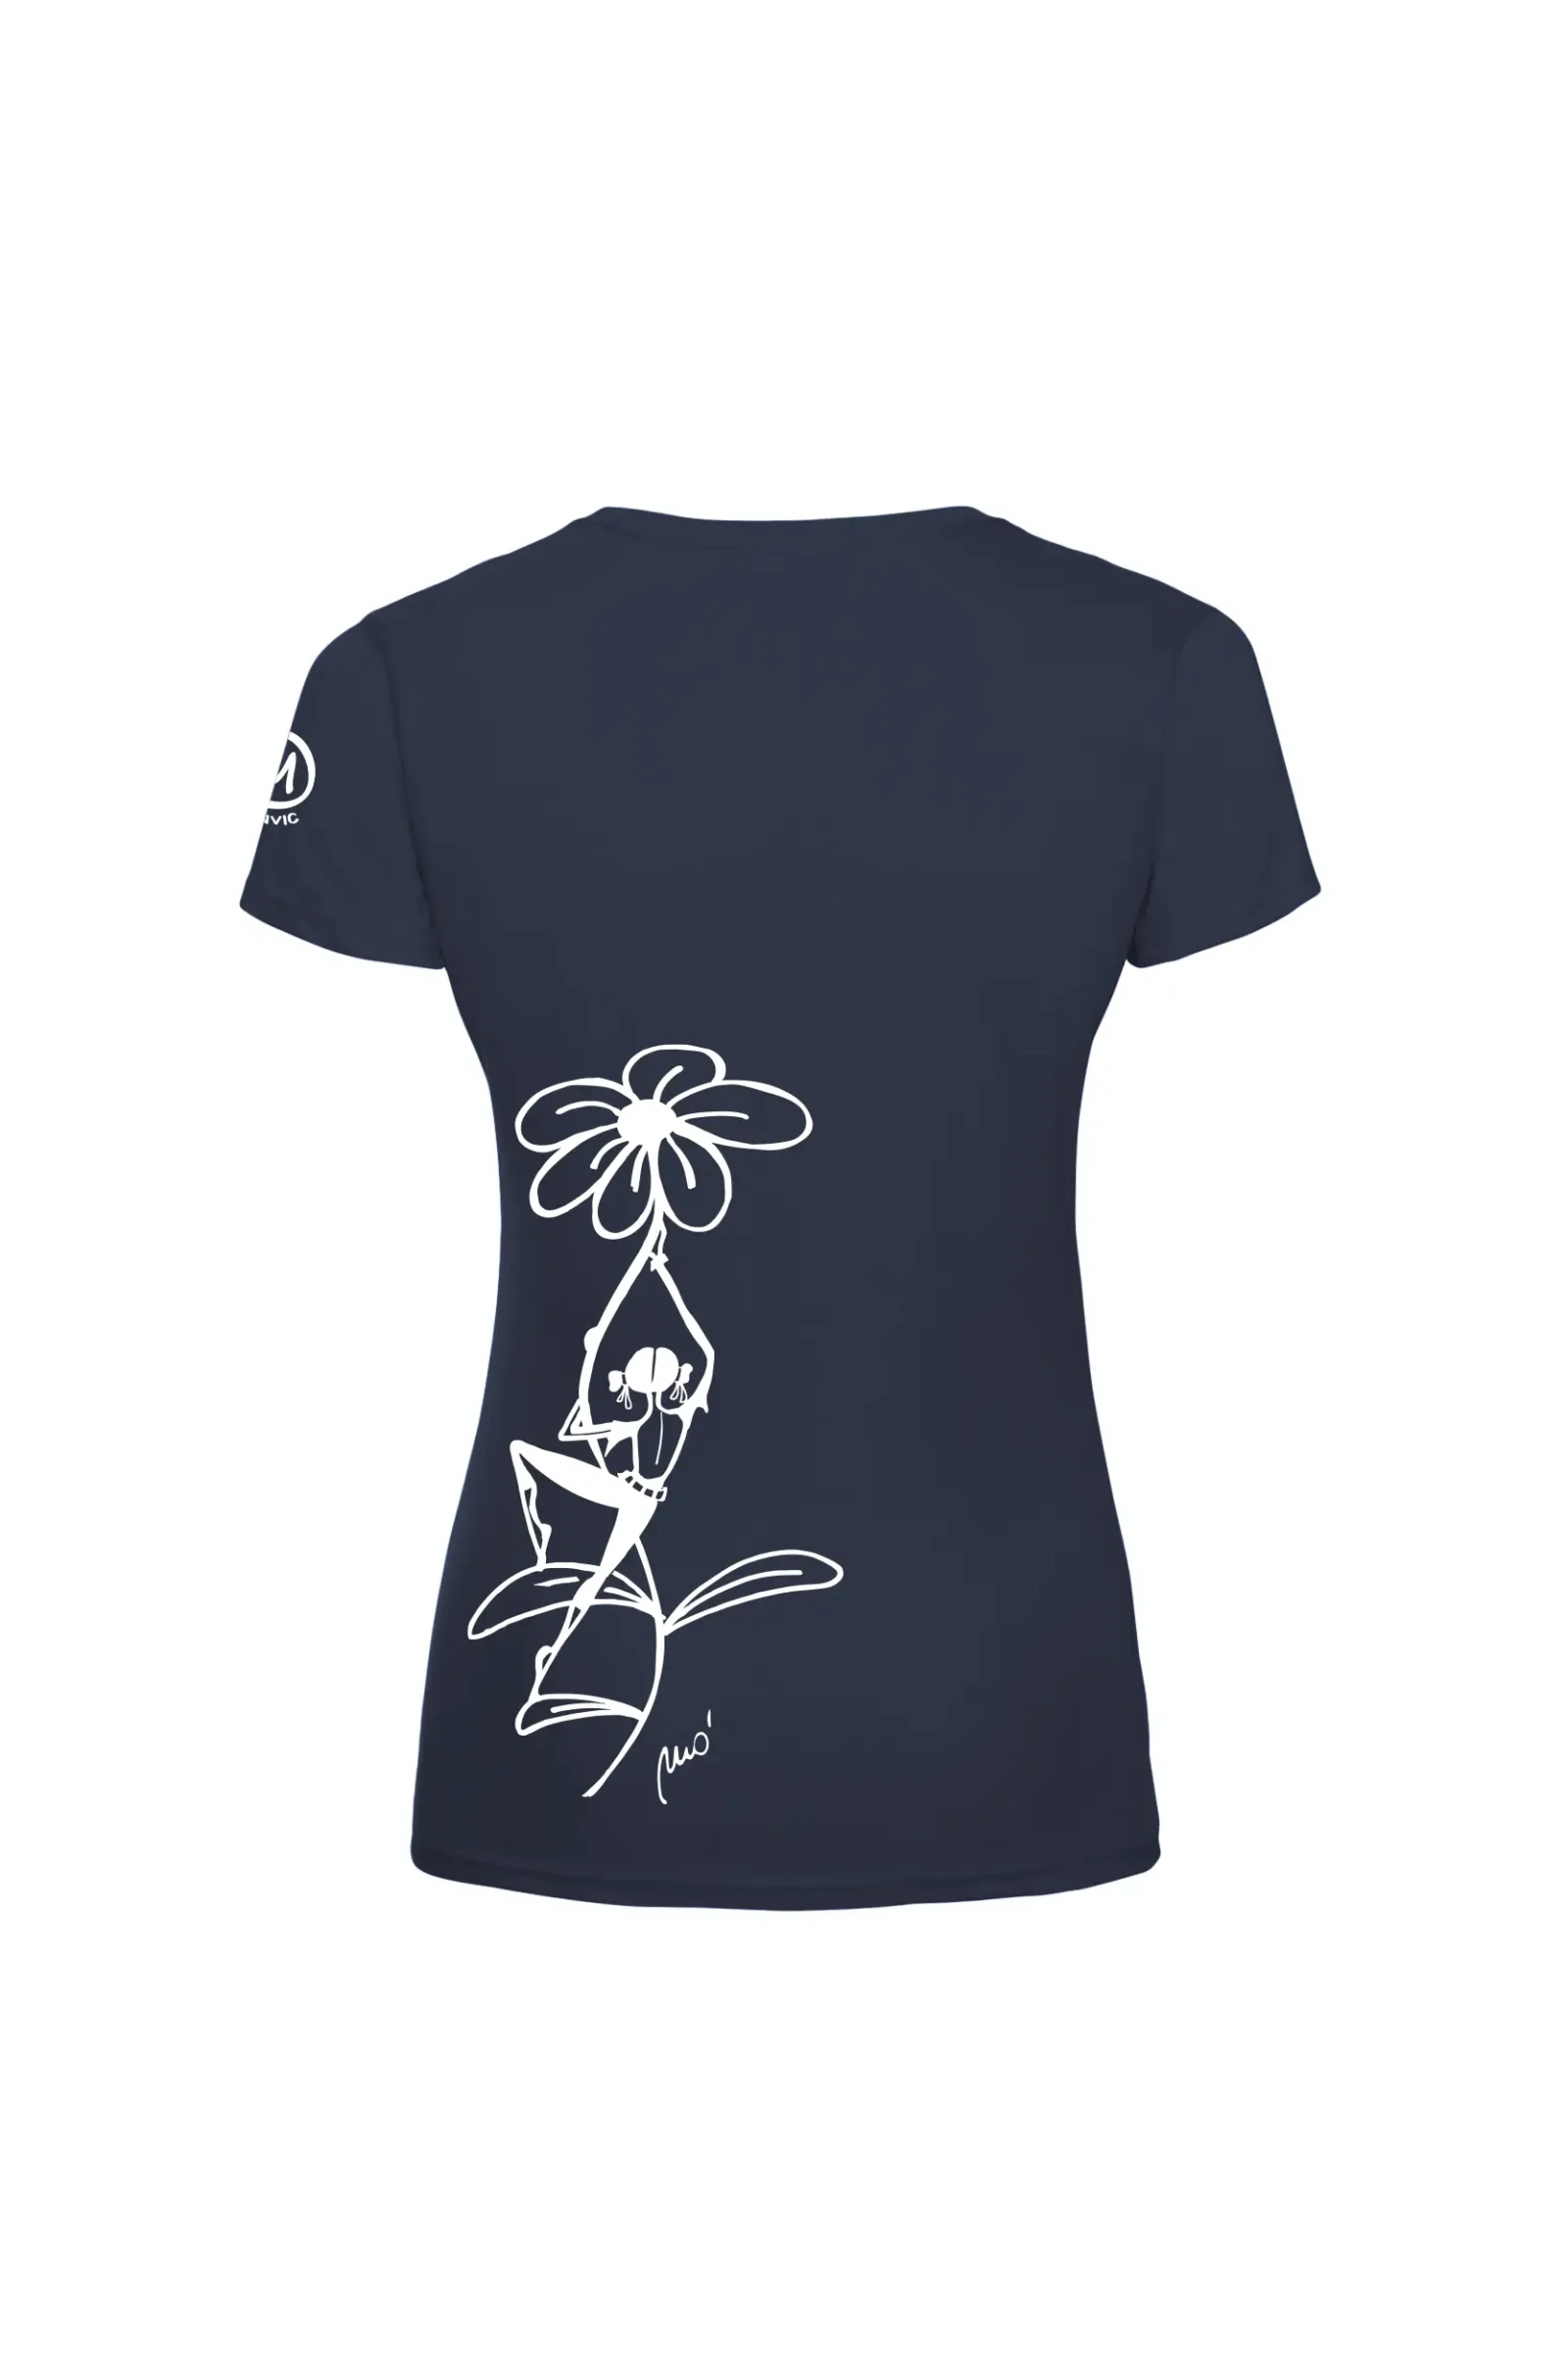 T-shirt escalade femme - coton bleu marine - "Carla" SHARON MONVIC